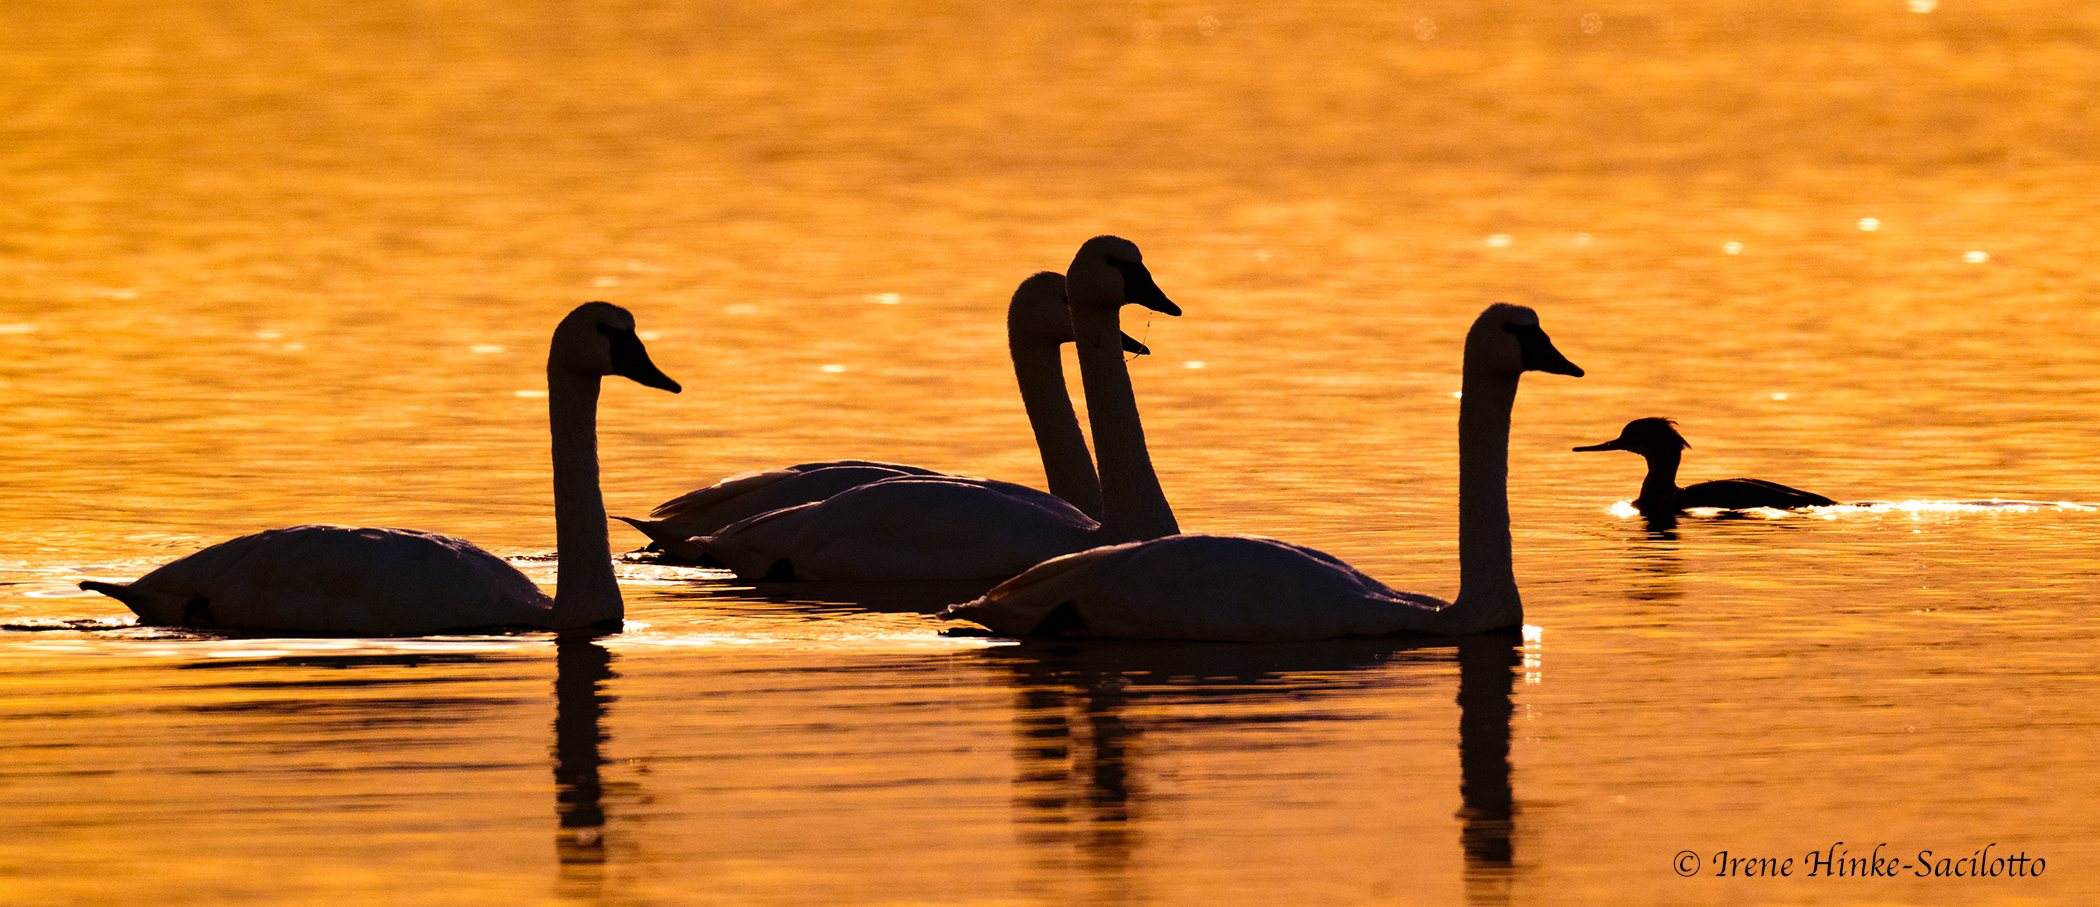 Swans at sunset with merganser